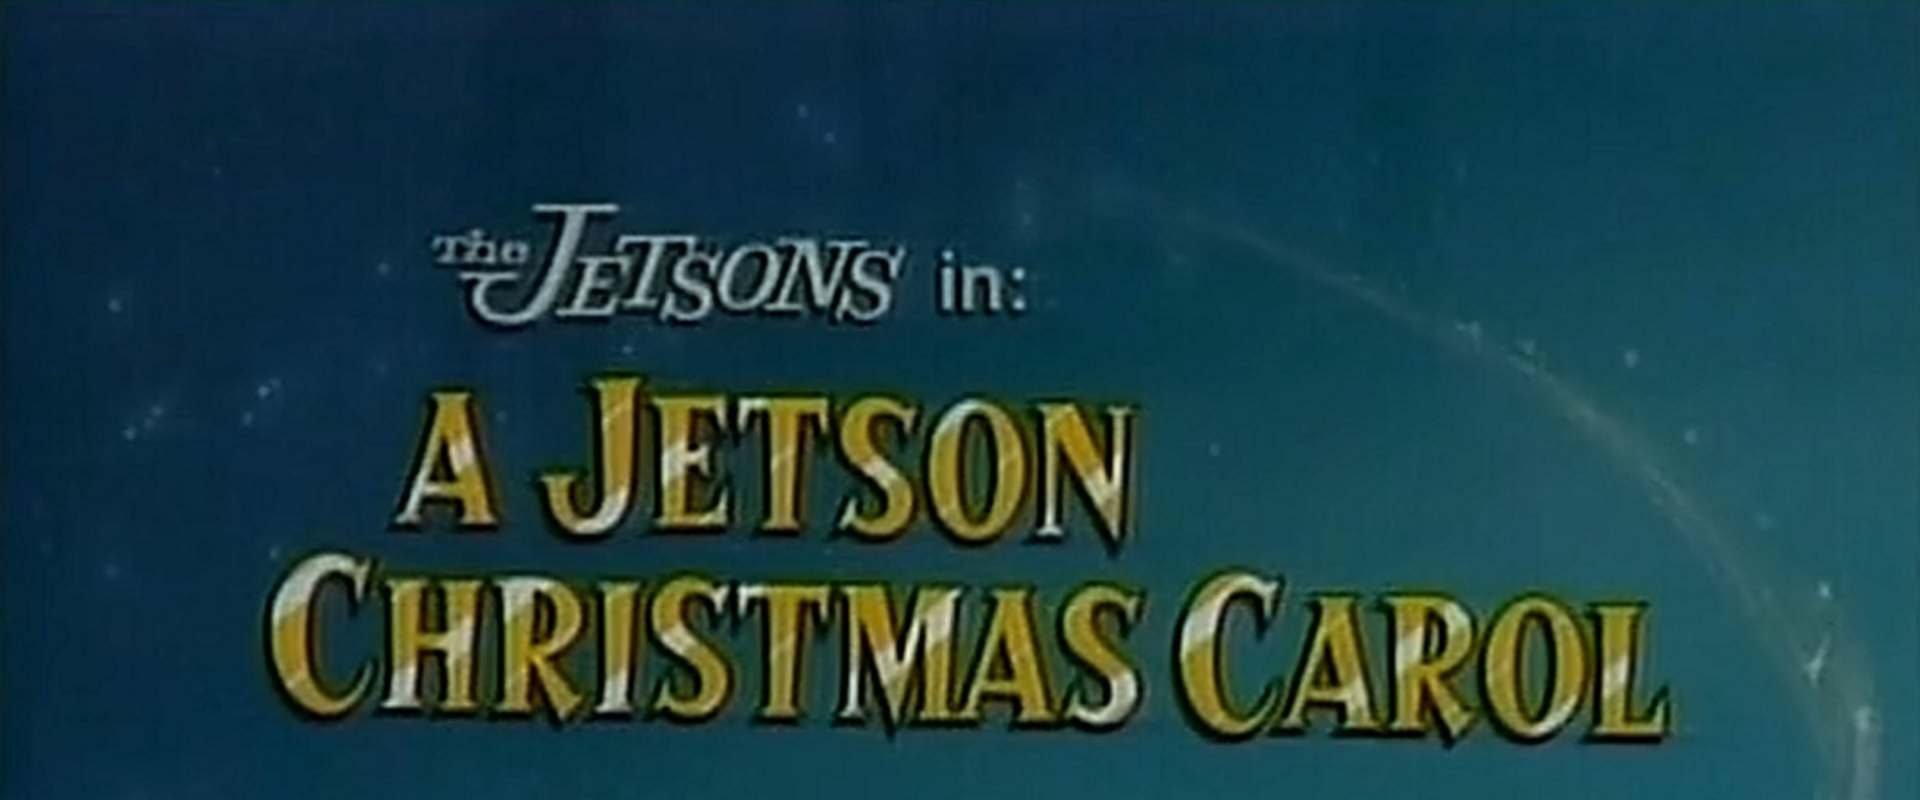 A Jetson Christmas Carol background 1